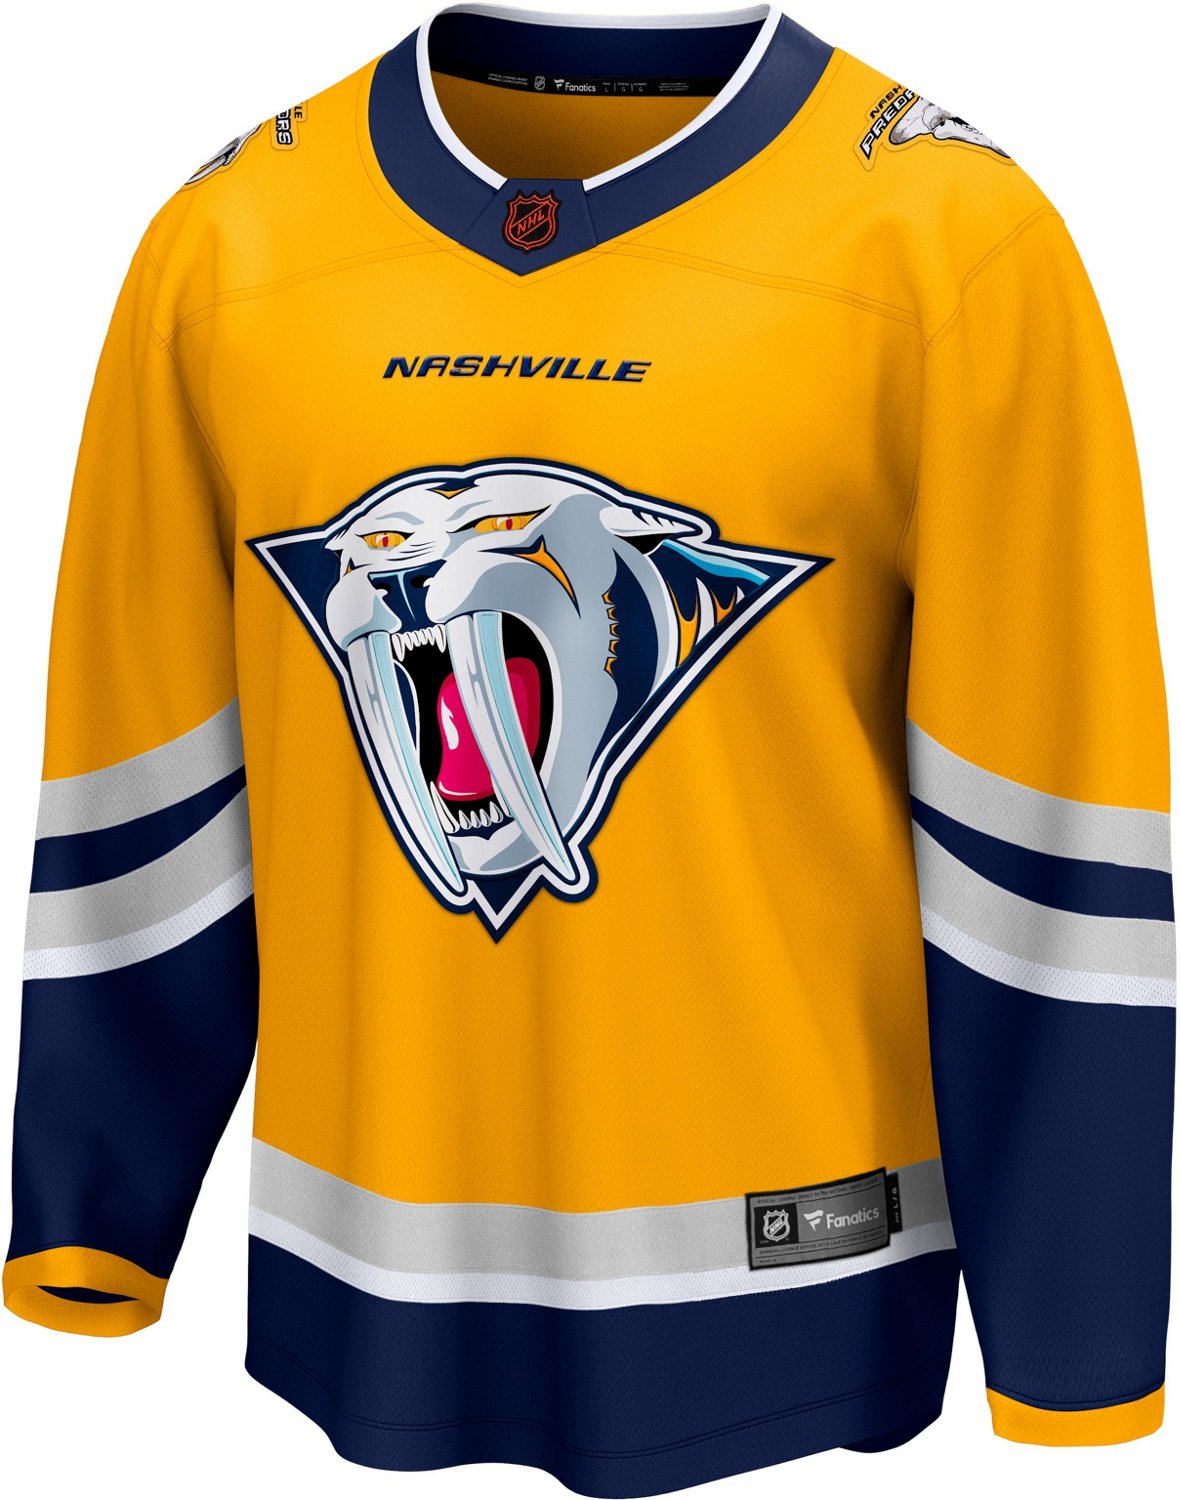 NHL Nashville Predators Reverse Retro Kits Hoodie